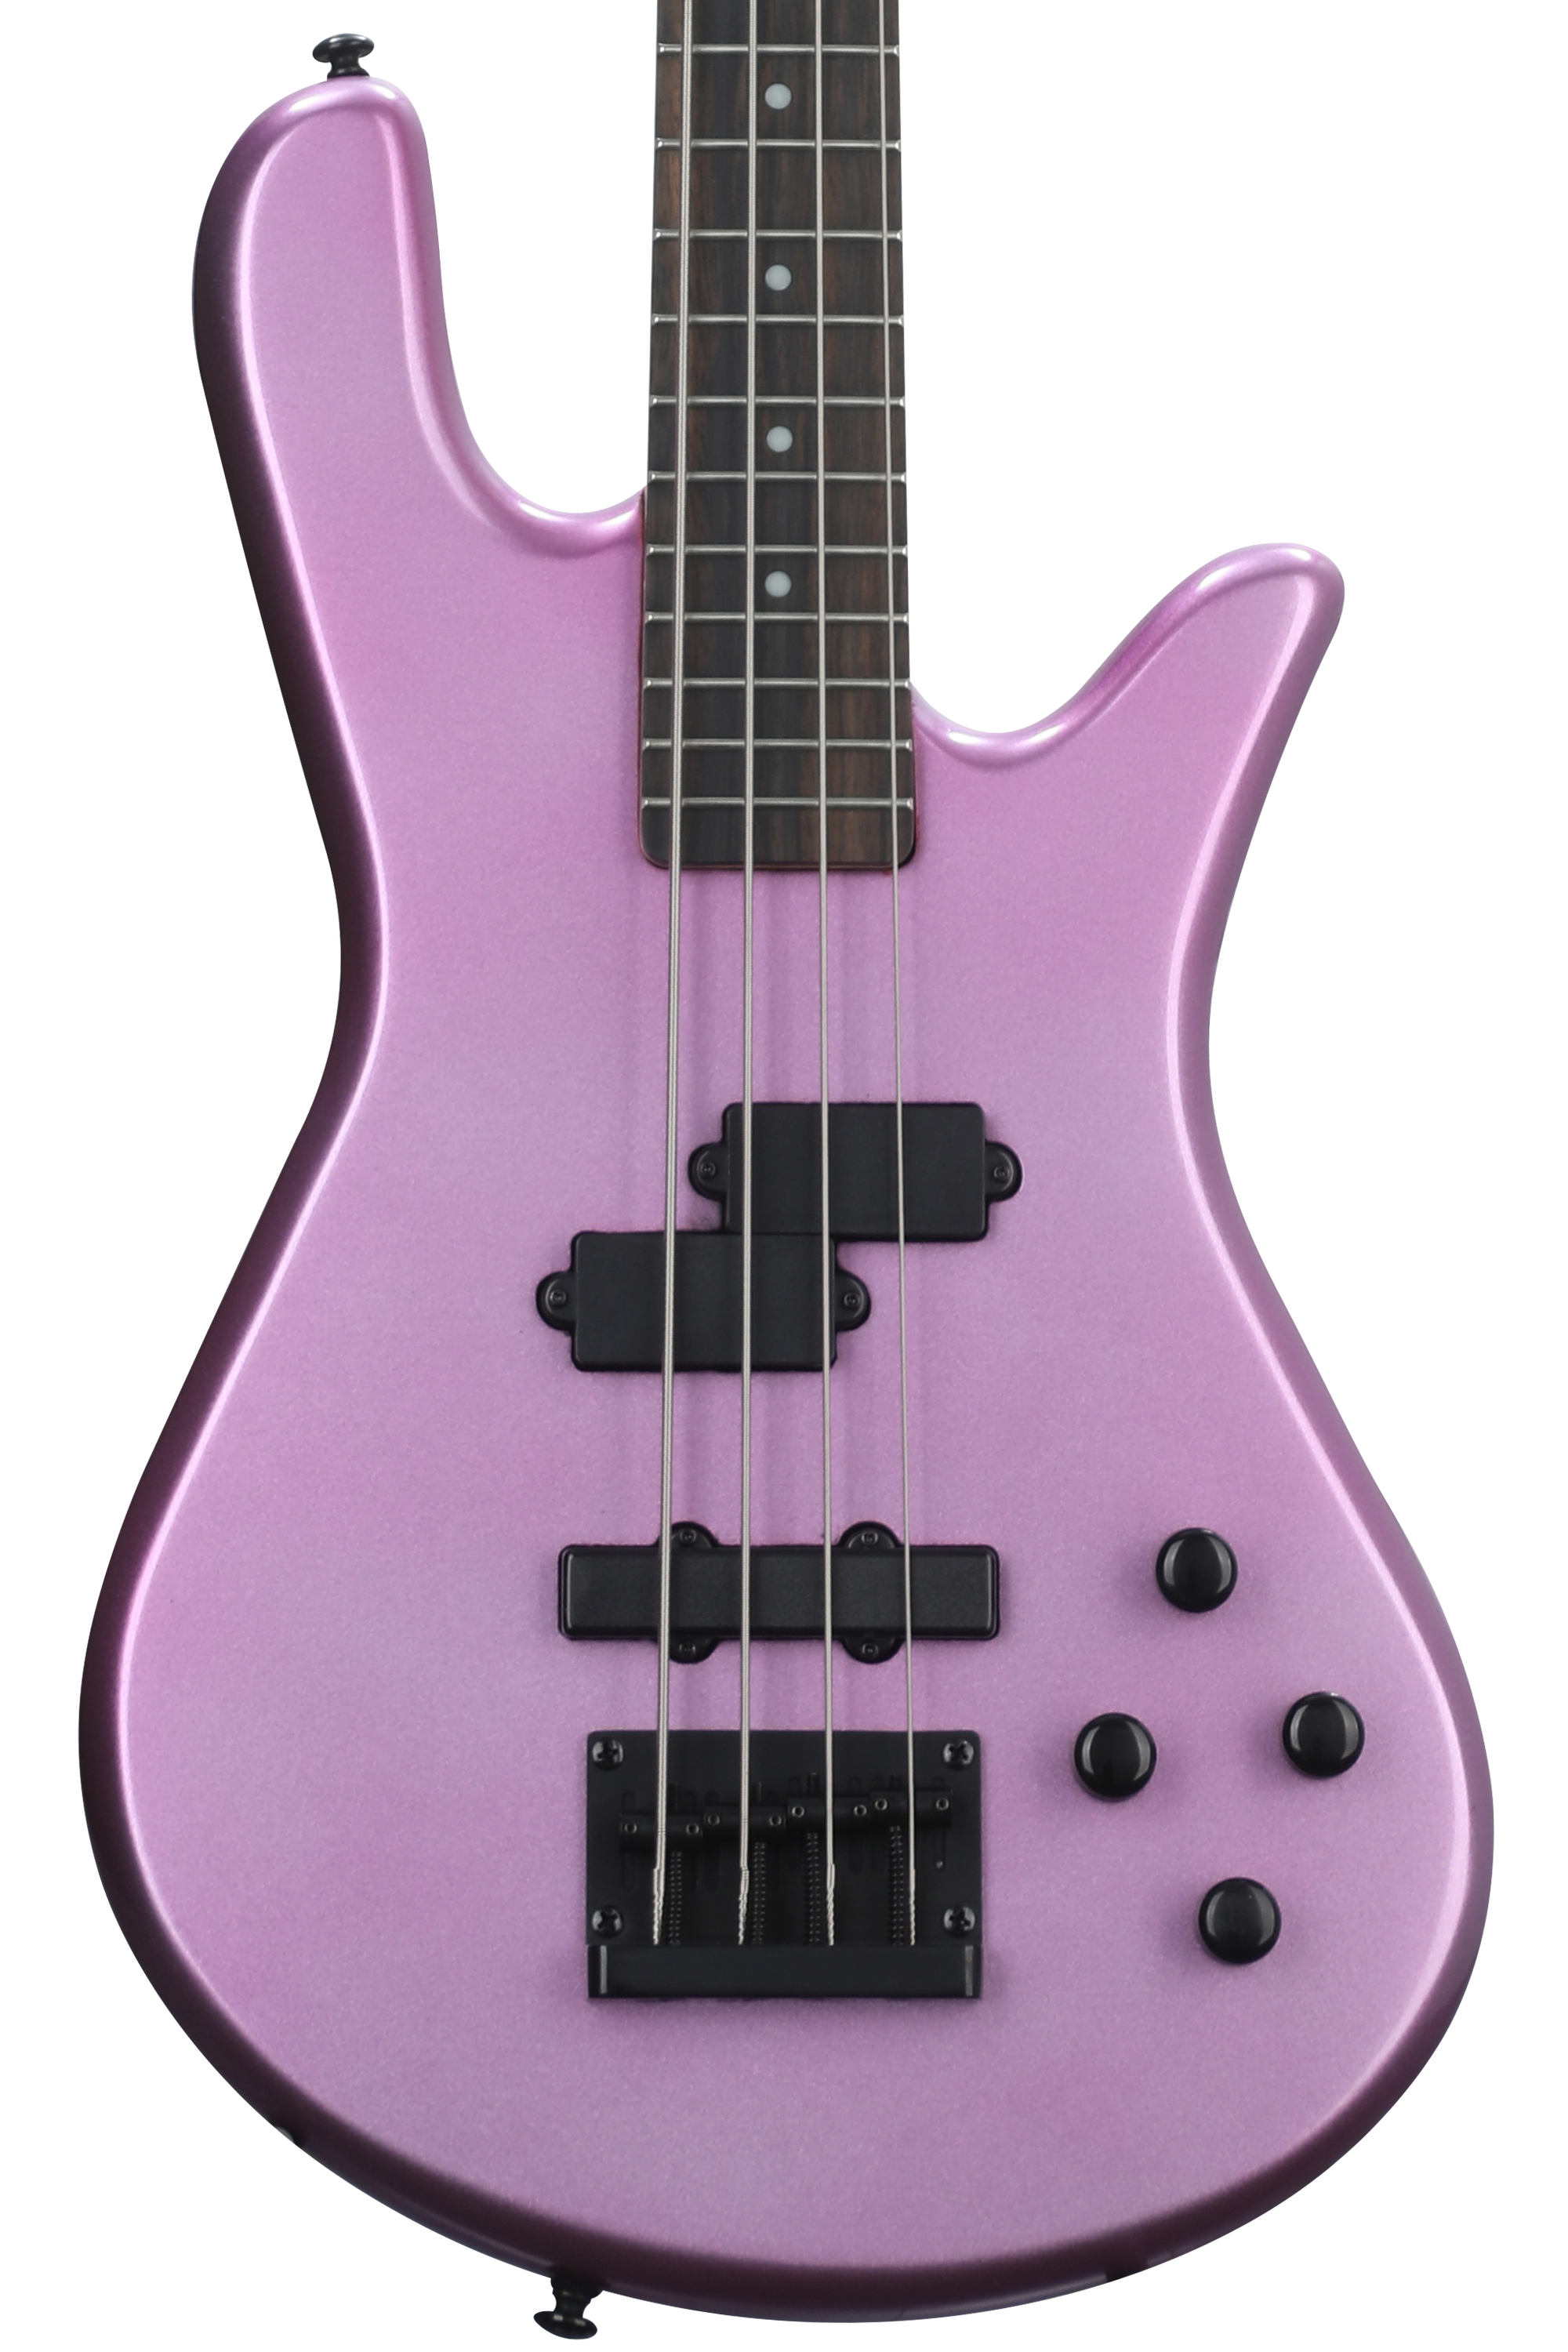 Spector Performer 4 Bass Guitar - Metallic Purple | Sweetwater